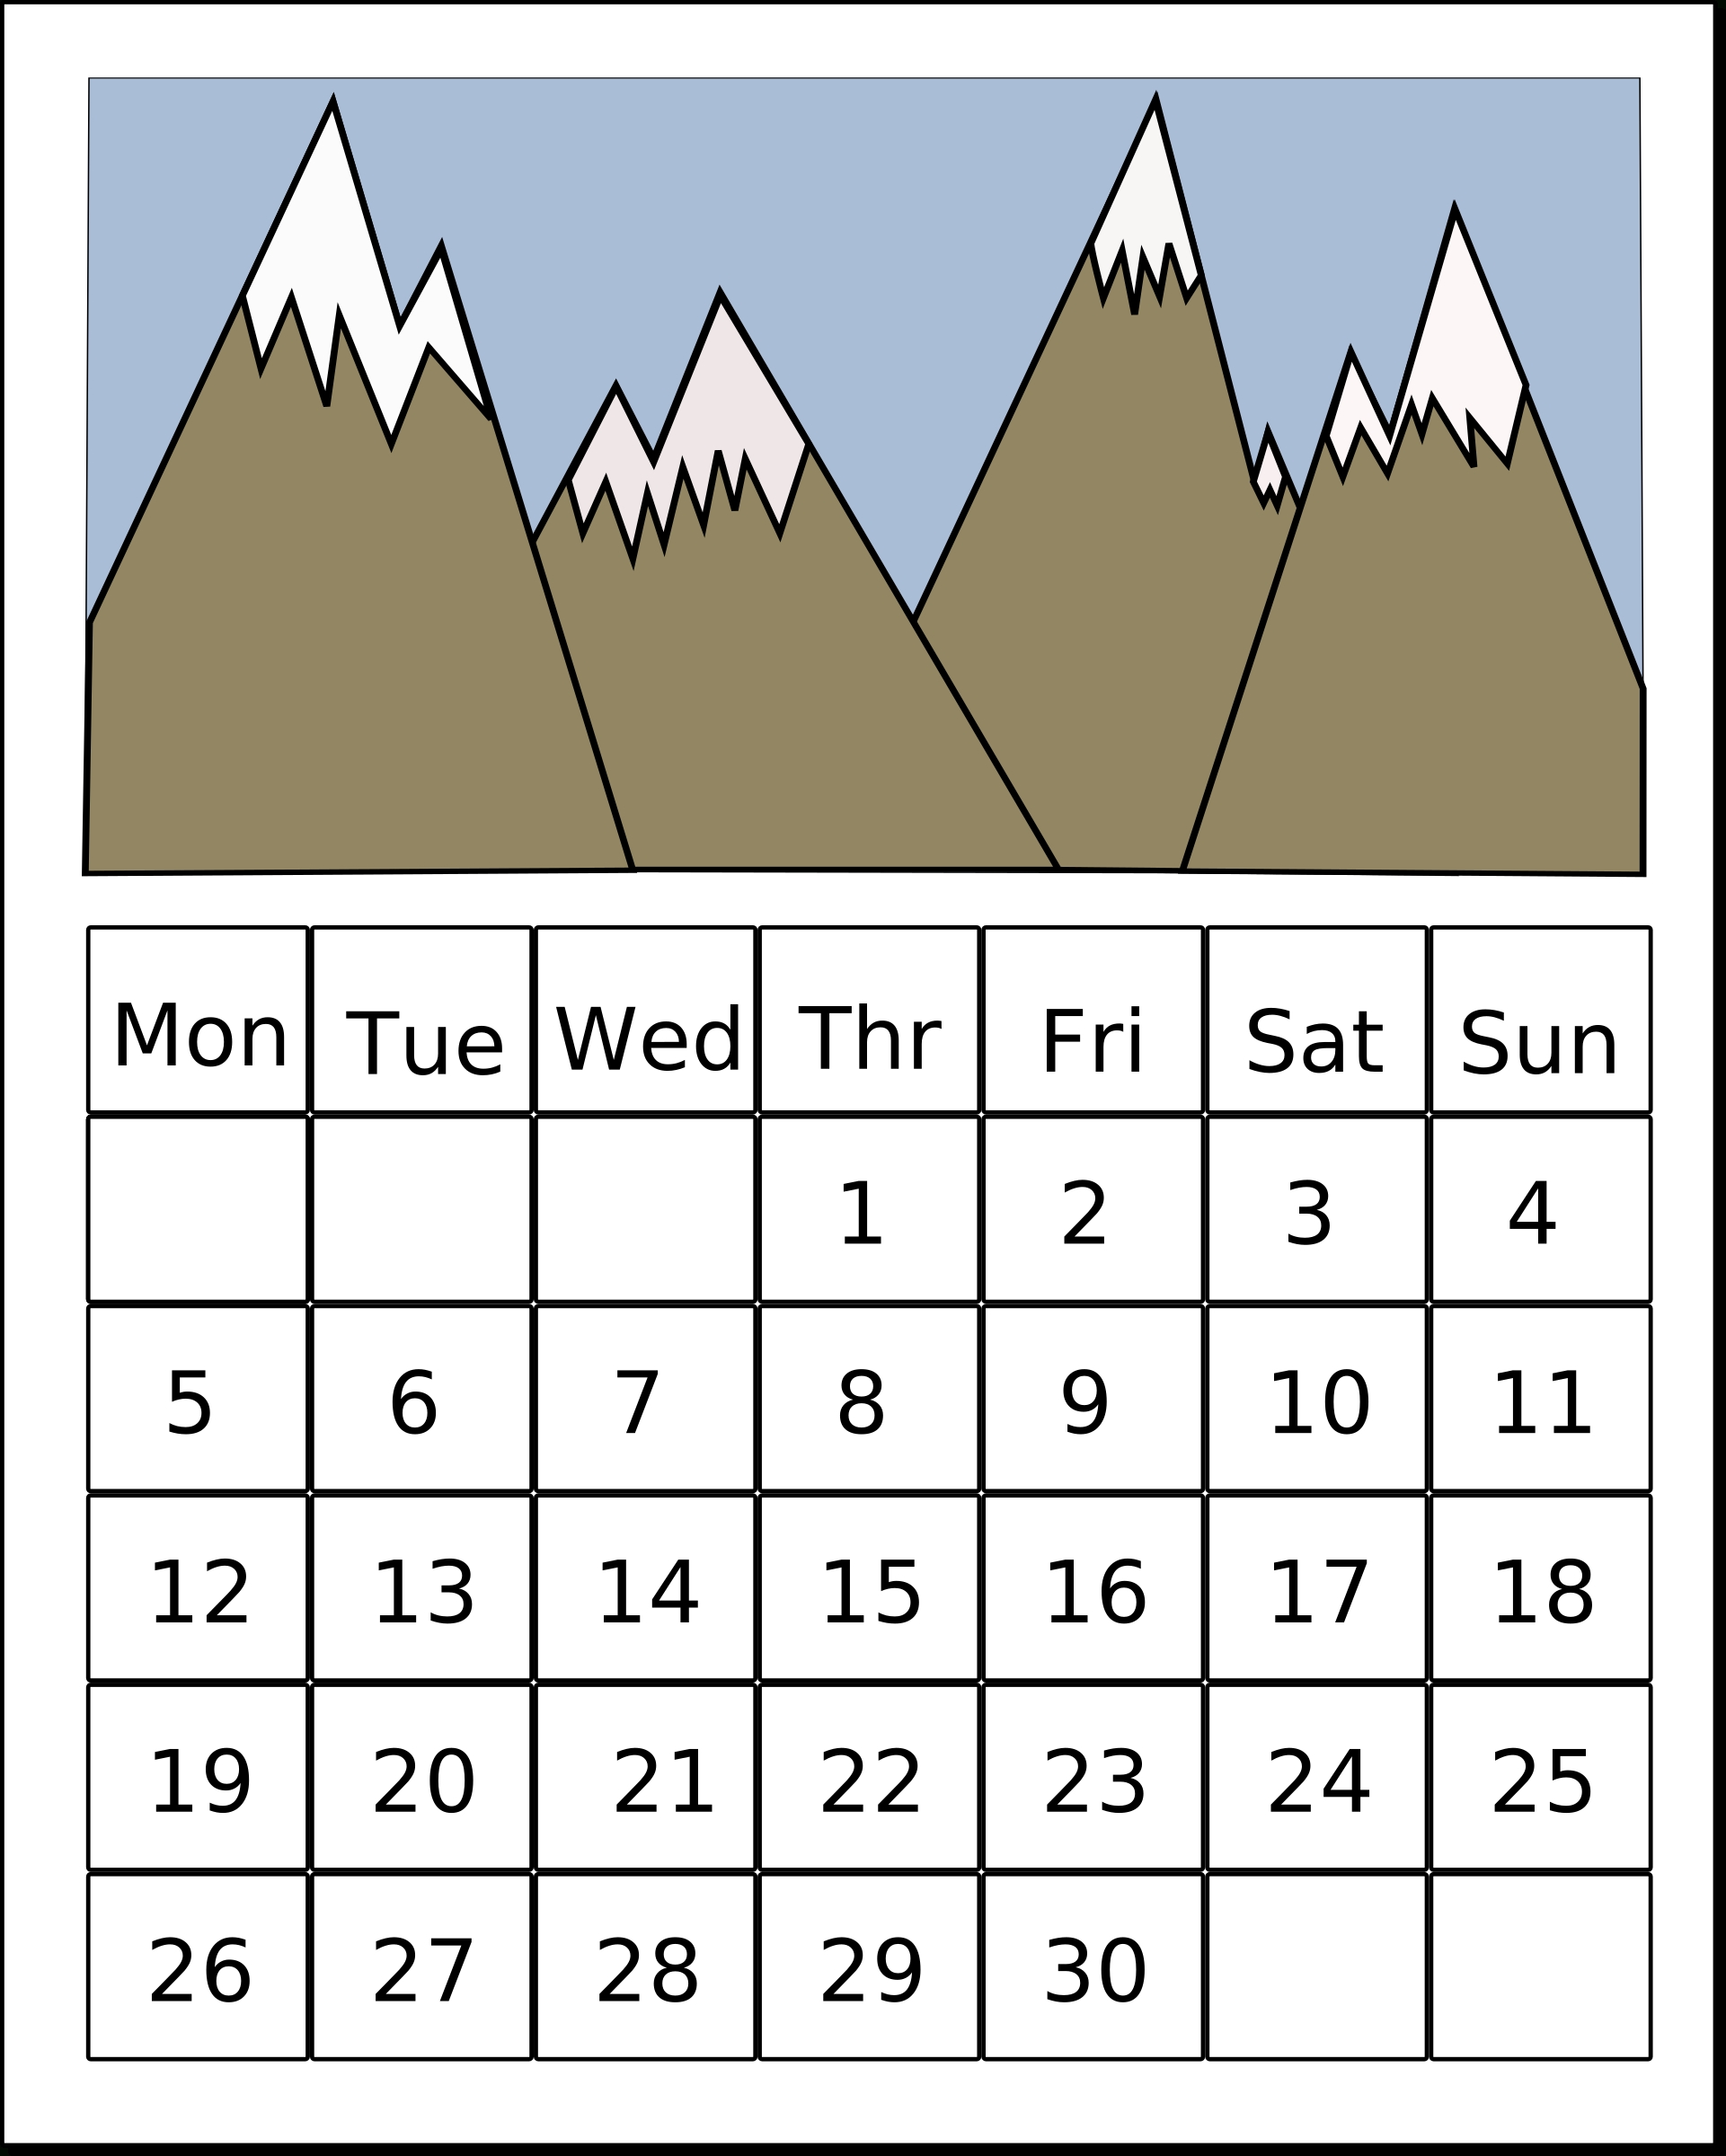 Calendar Of Stem-Related Seasonal Events And Holidays | Nise Network inside Calendar For Women Onth Of September